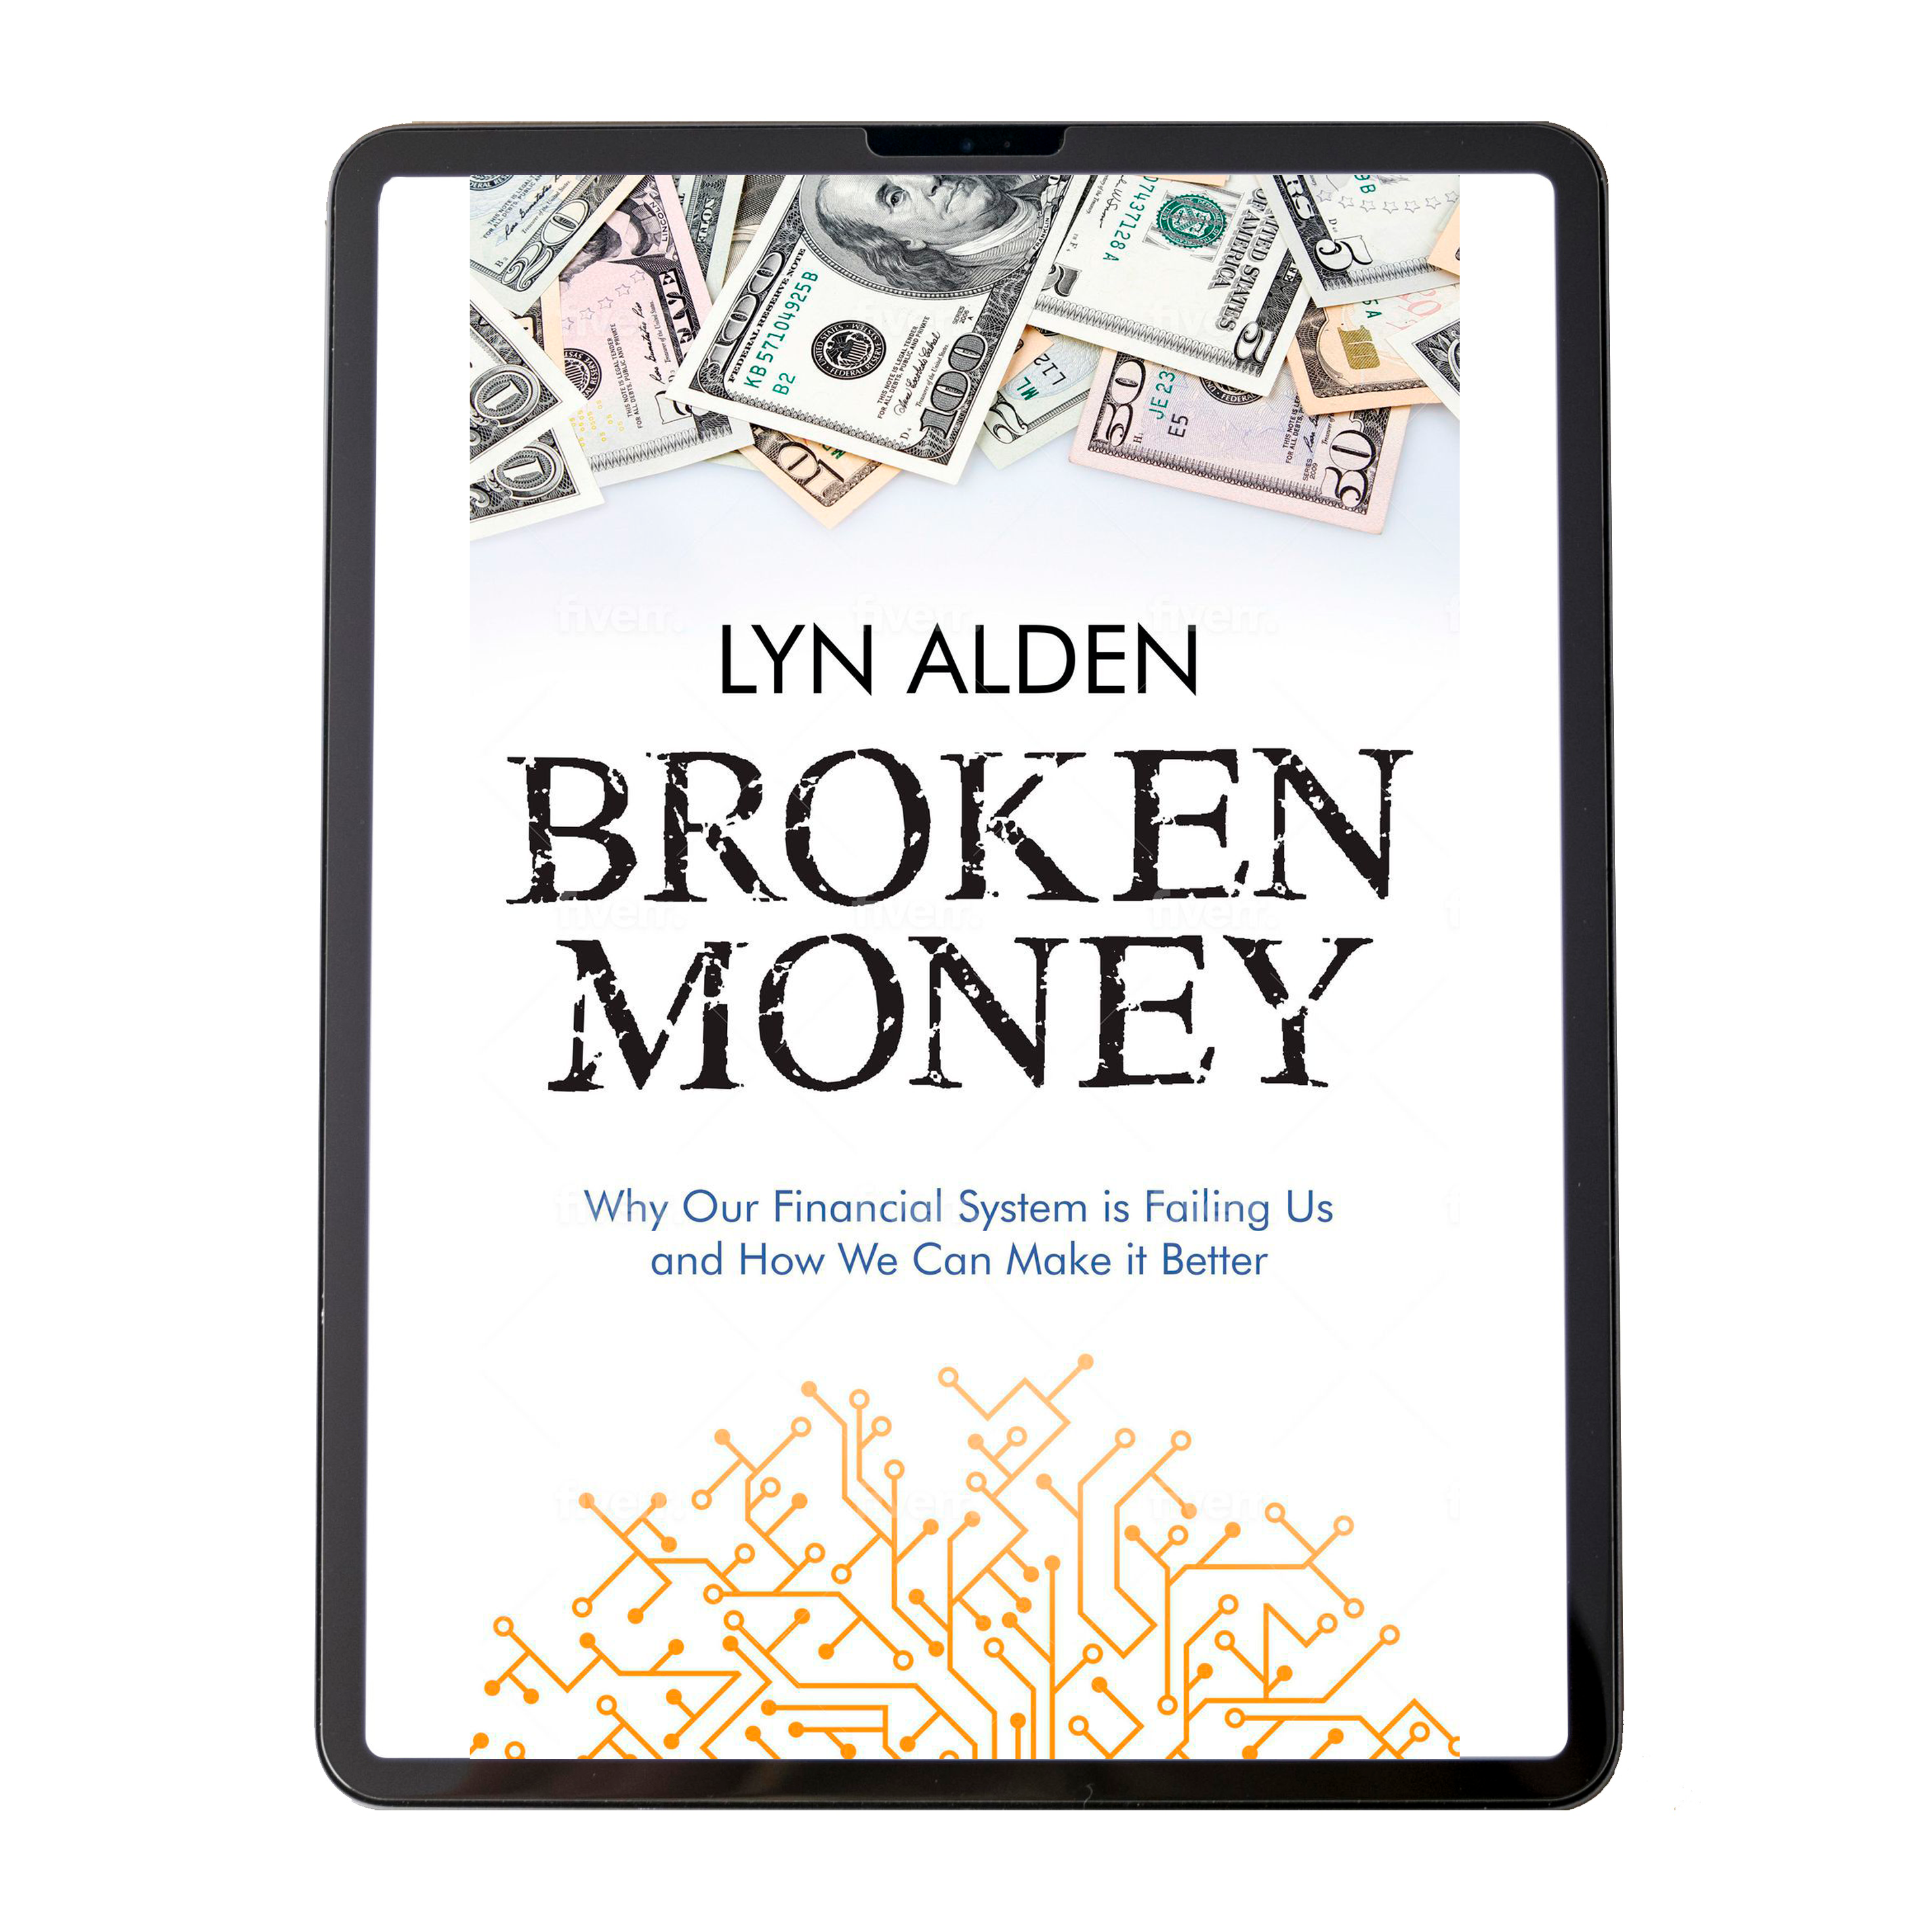 Dr. No Money: The Broken Science Funding System